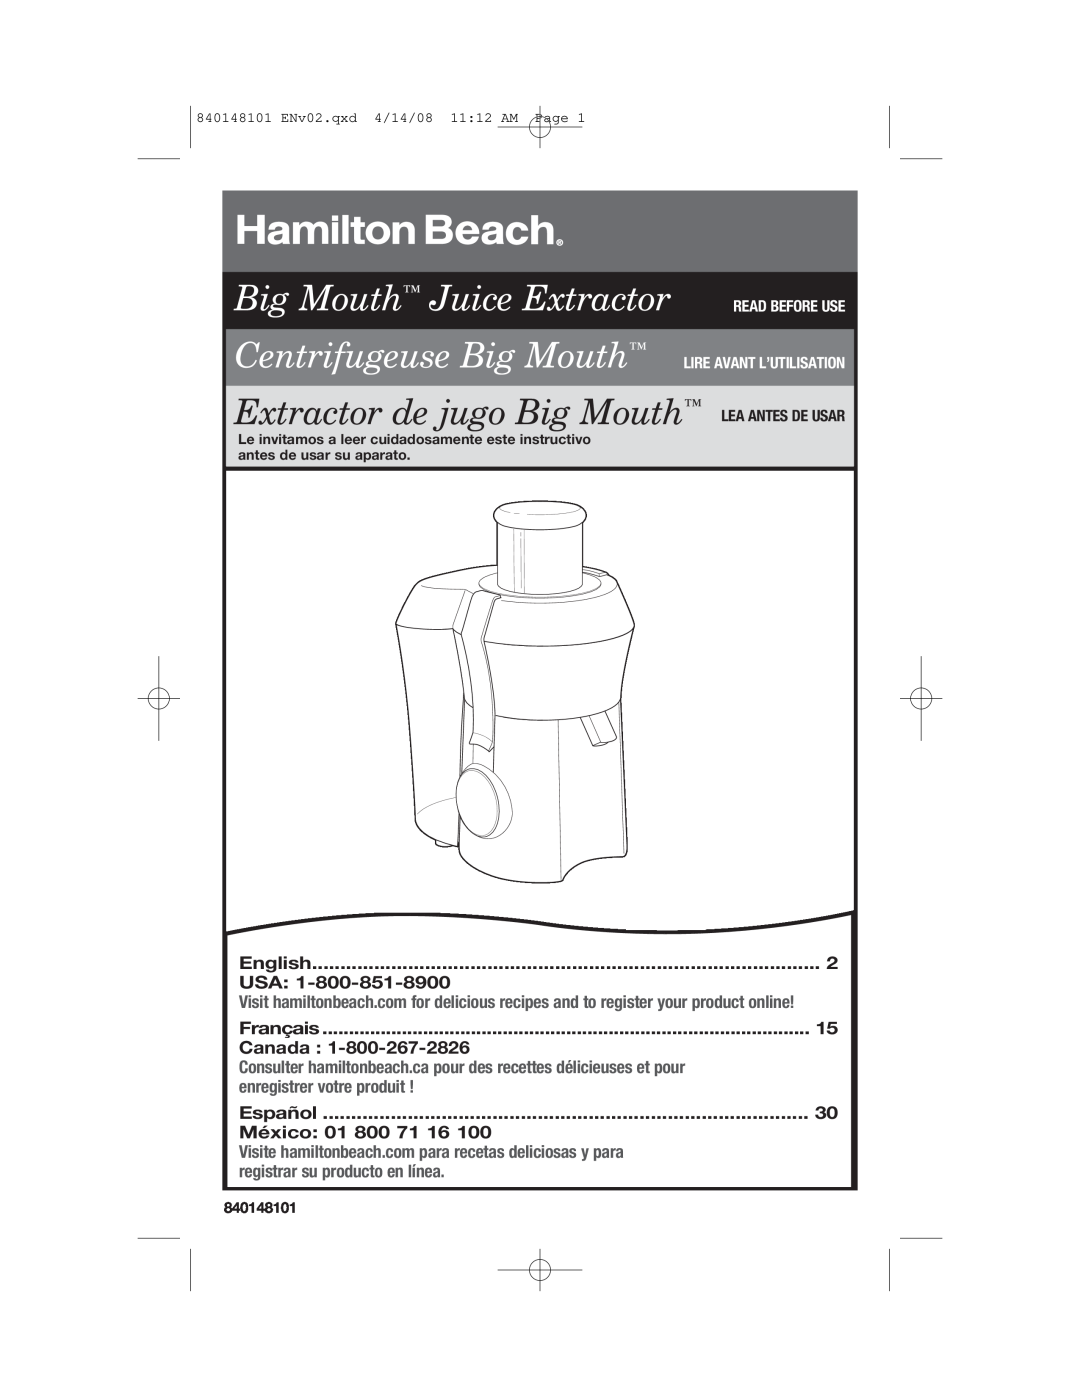 Hamilton Beach 840148101 manual Big Mouth Juice Extractor, Centrifugeuse Big Mouth, English, Usa, Français, Canada, México 